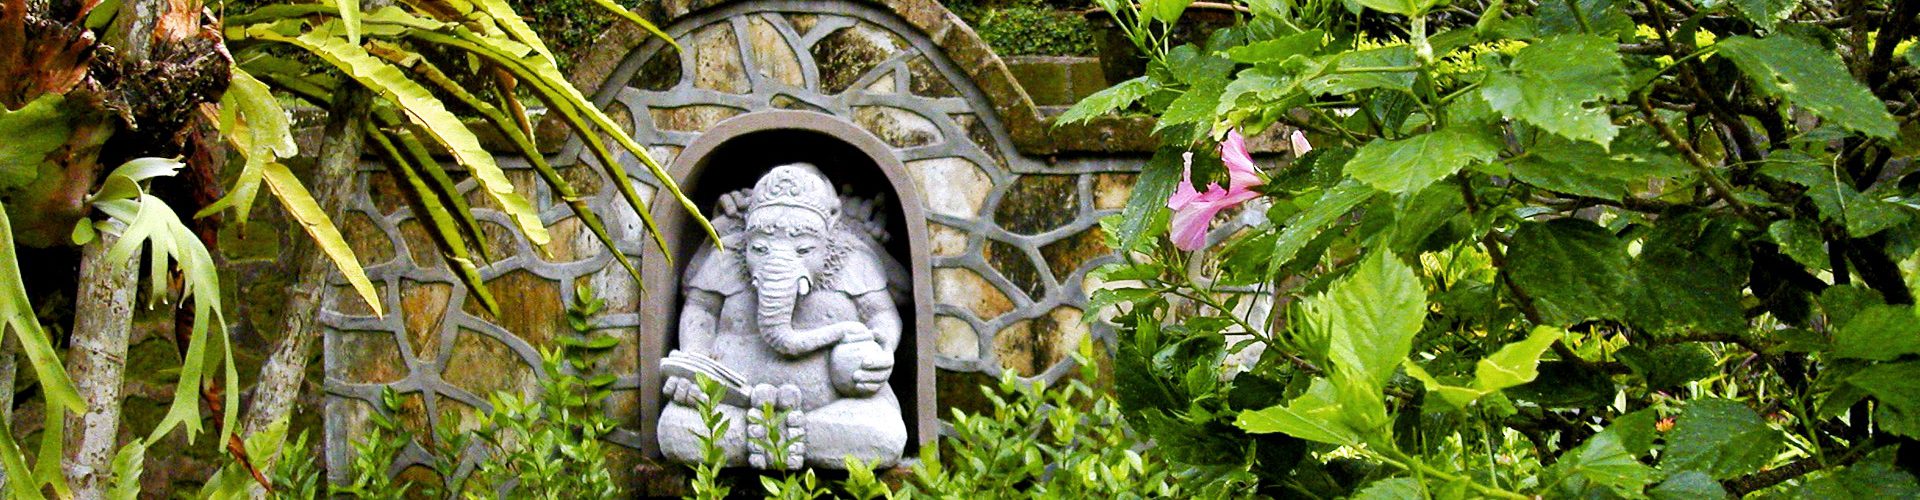 Ganesha Gebetsfahne aus Nepal